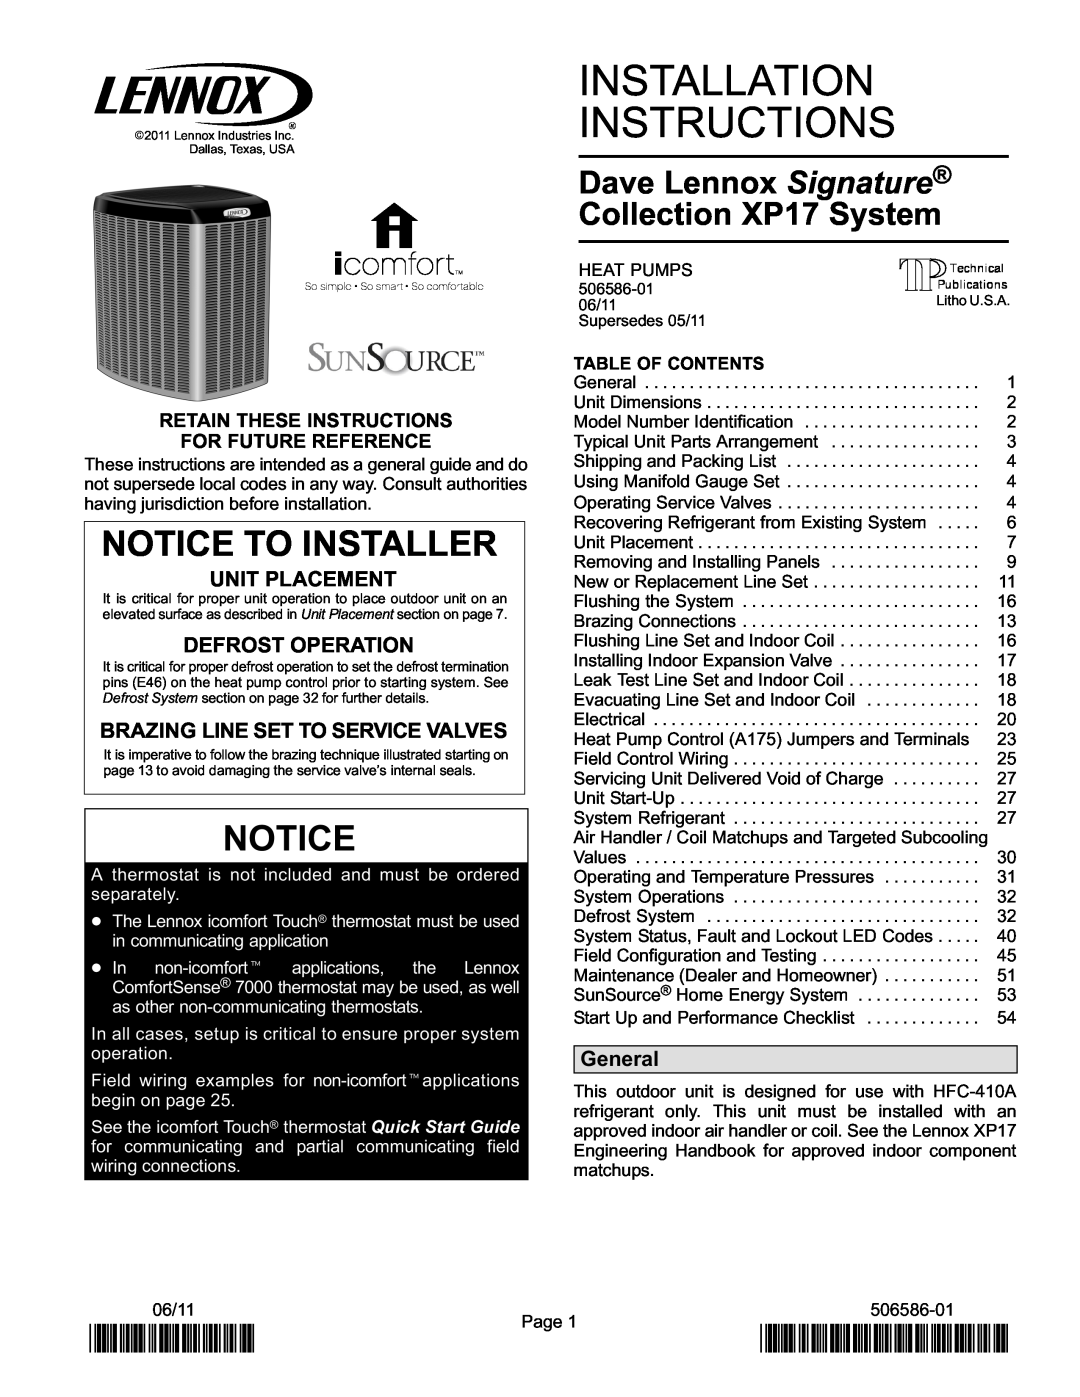 Lennox International Inc Dave Lennox Signature Collection XP17 System HEAT PUMPS installation instructions 2P0611, General 